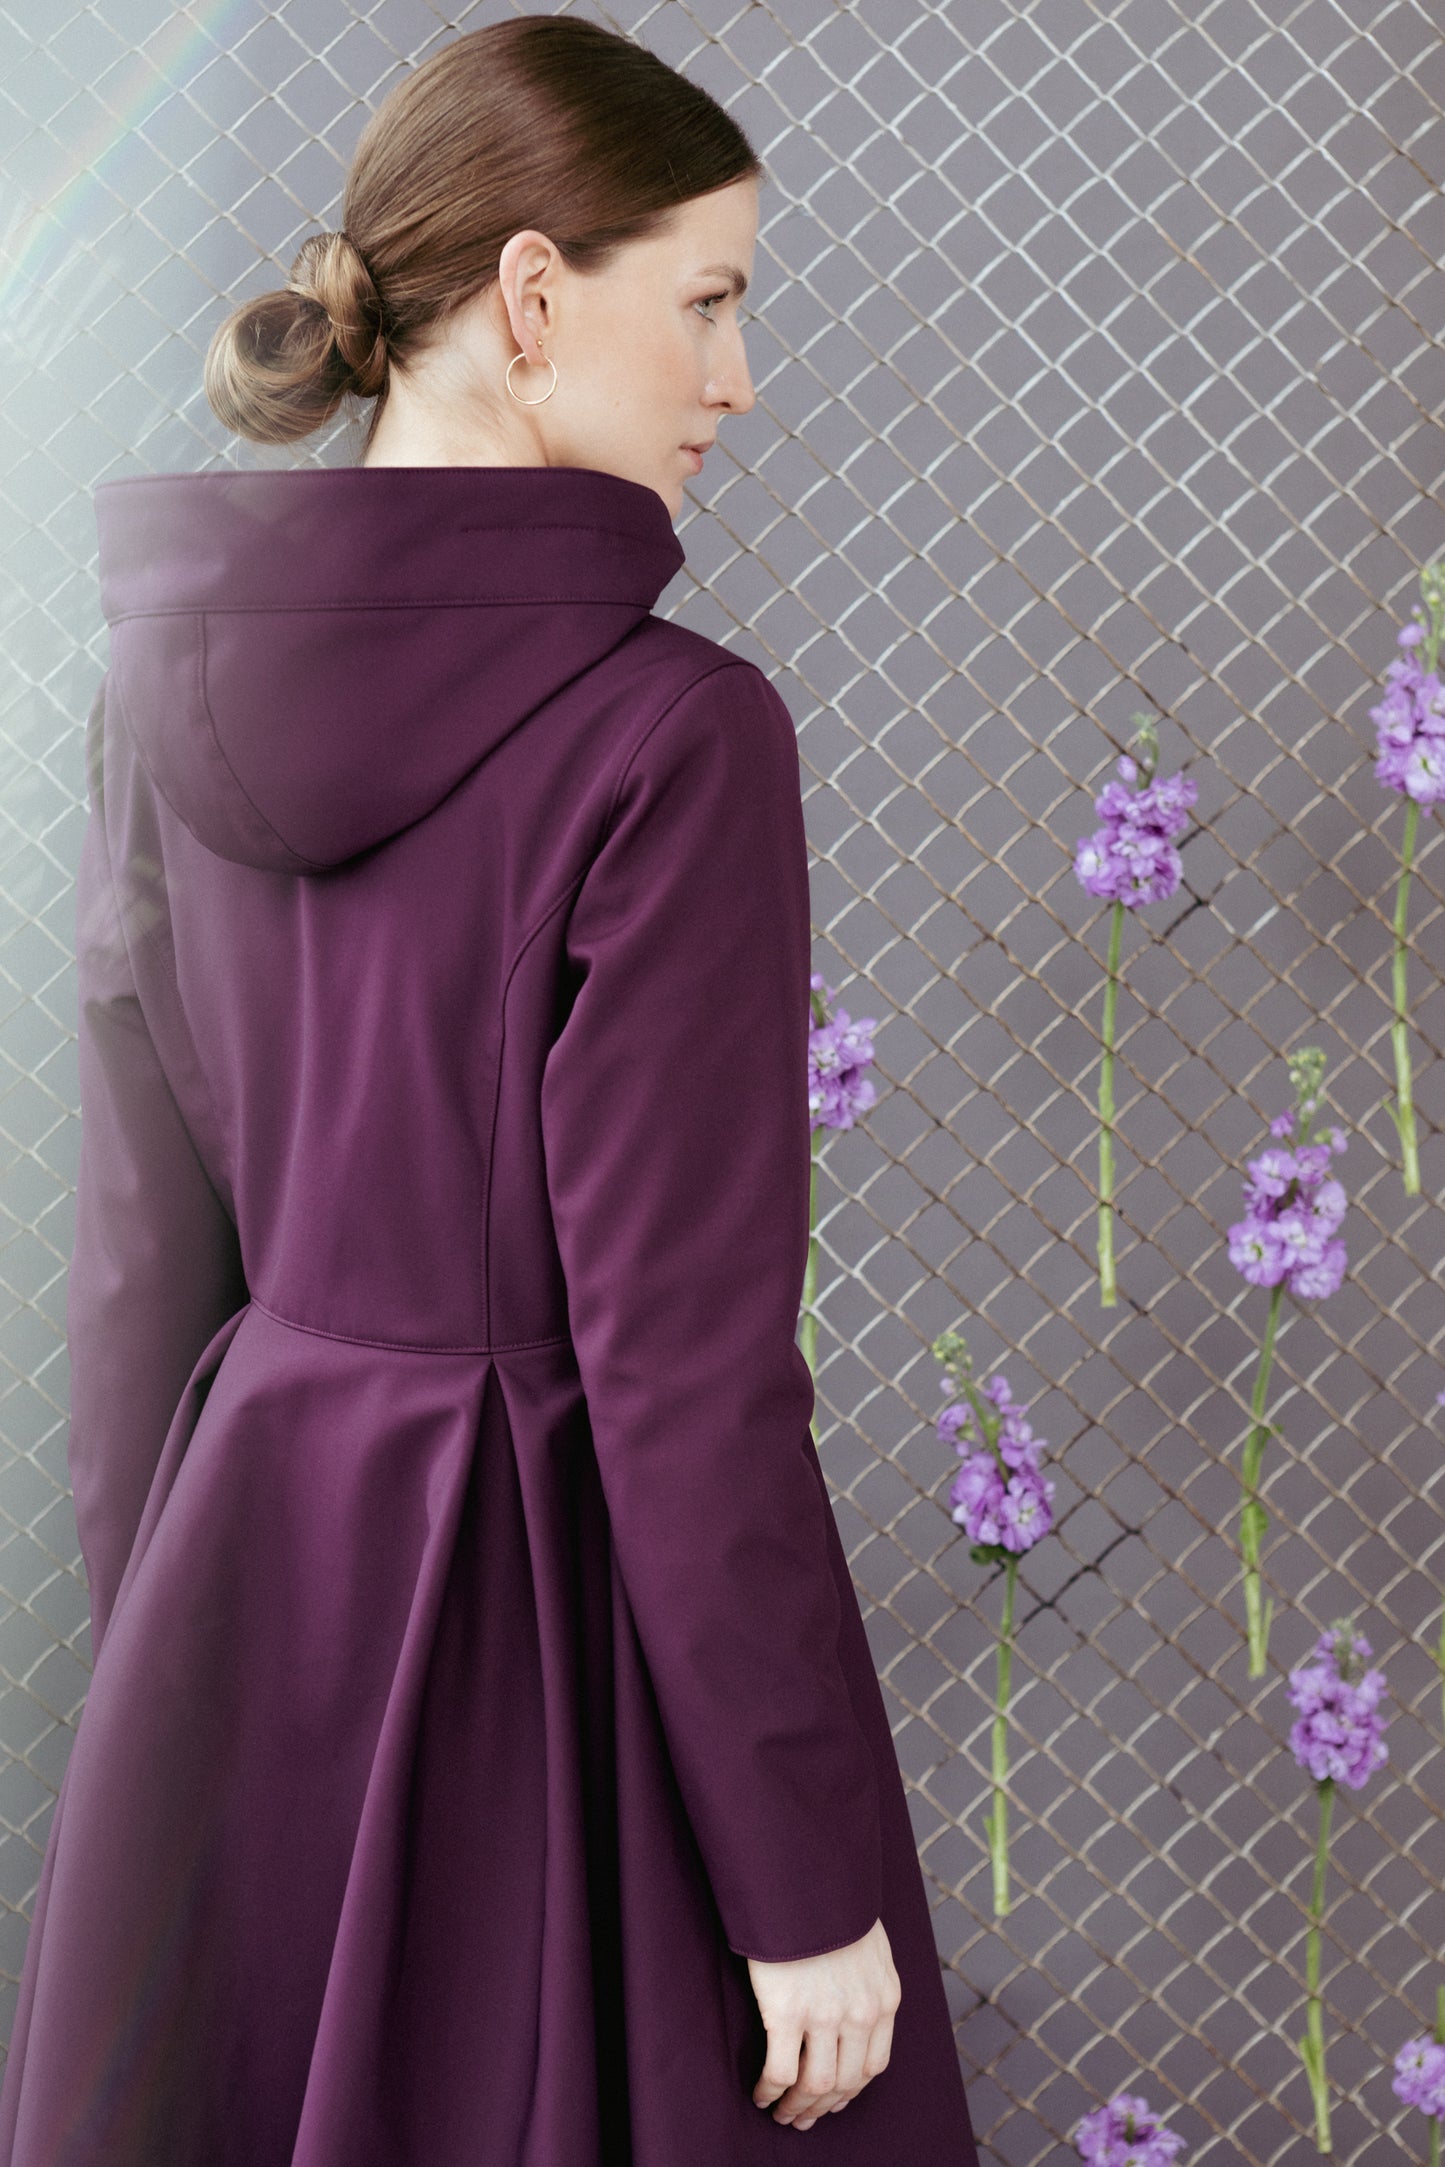 Waterproof Long Purple Coat for Women with pleated skirt part